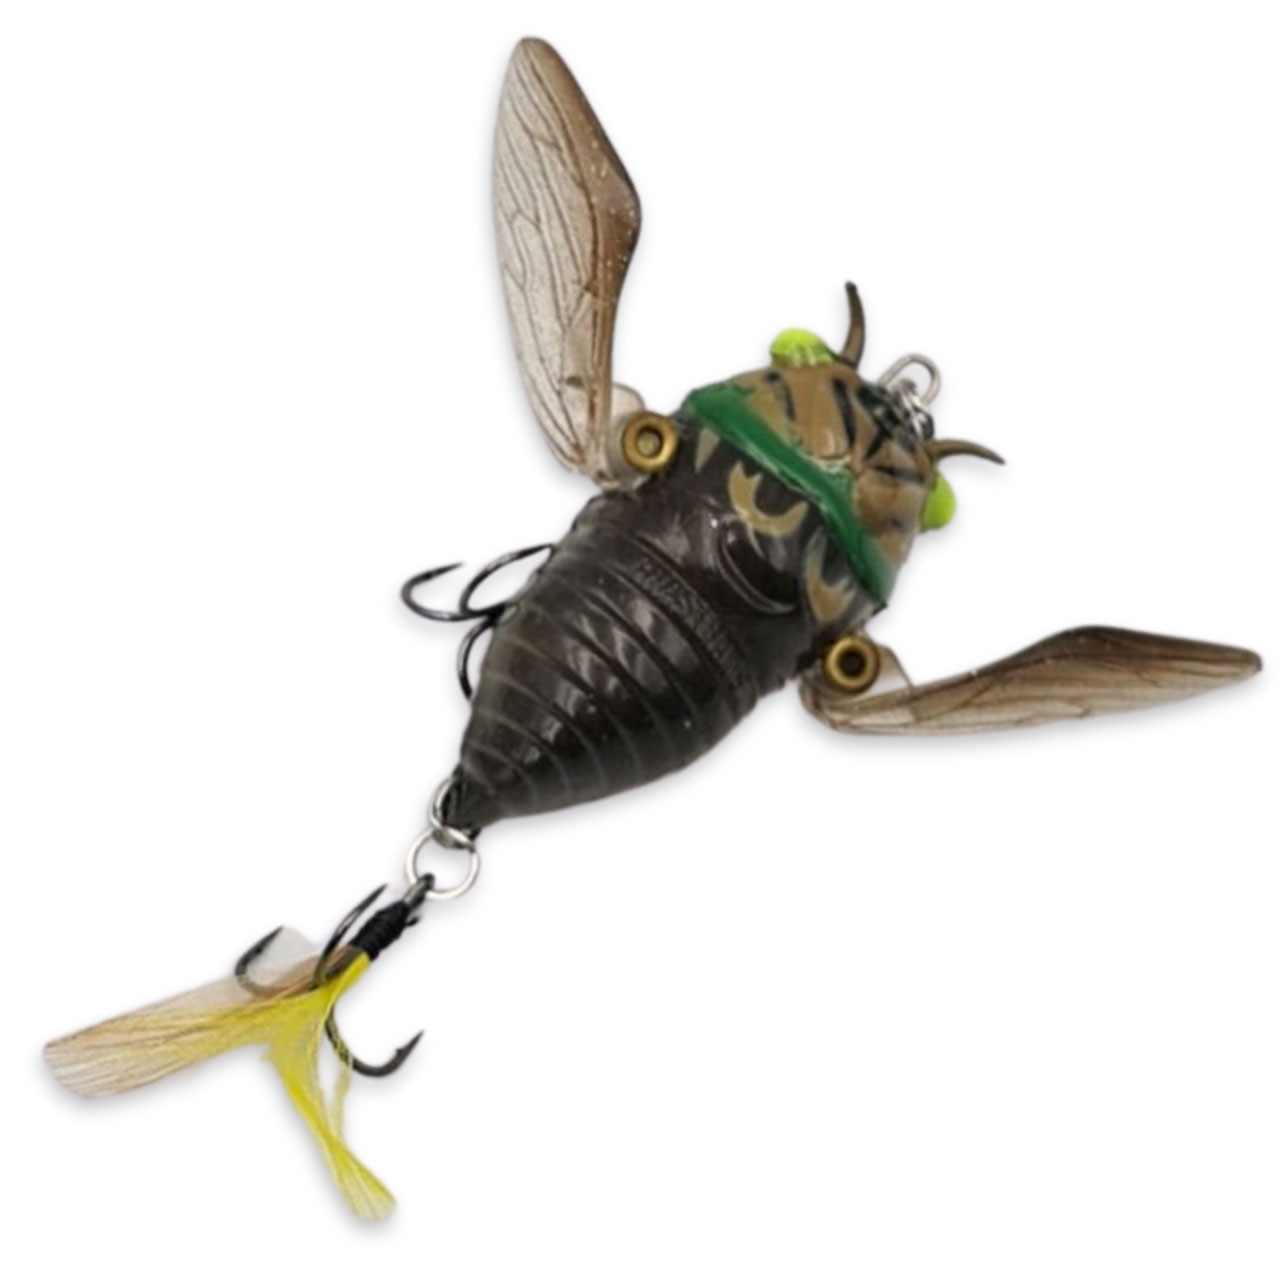 The Ripple Cicada